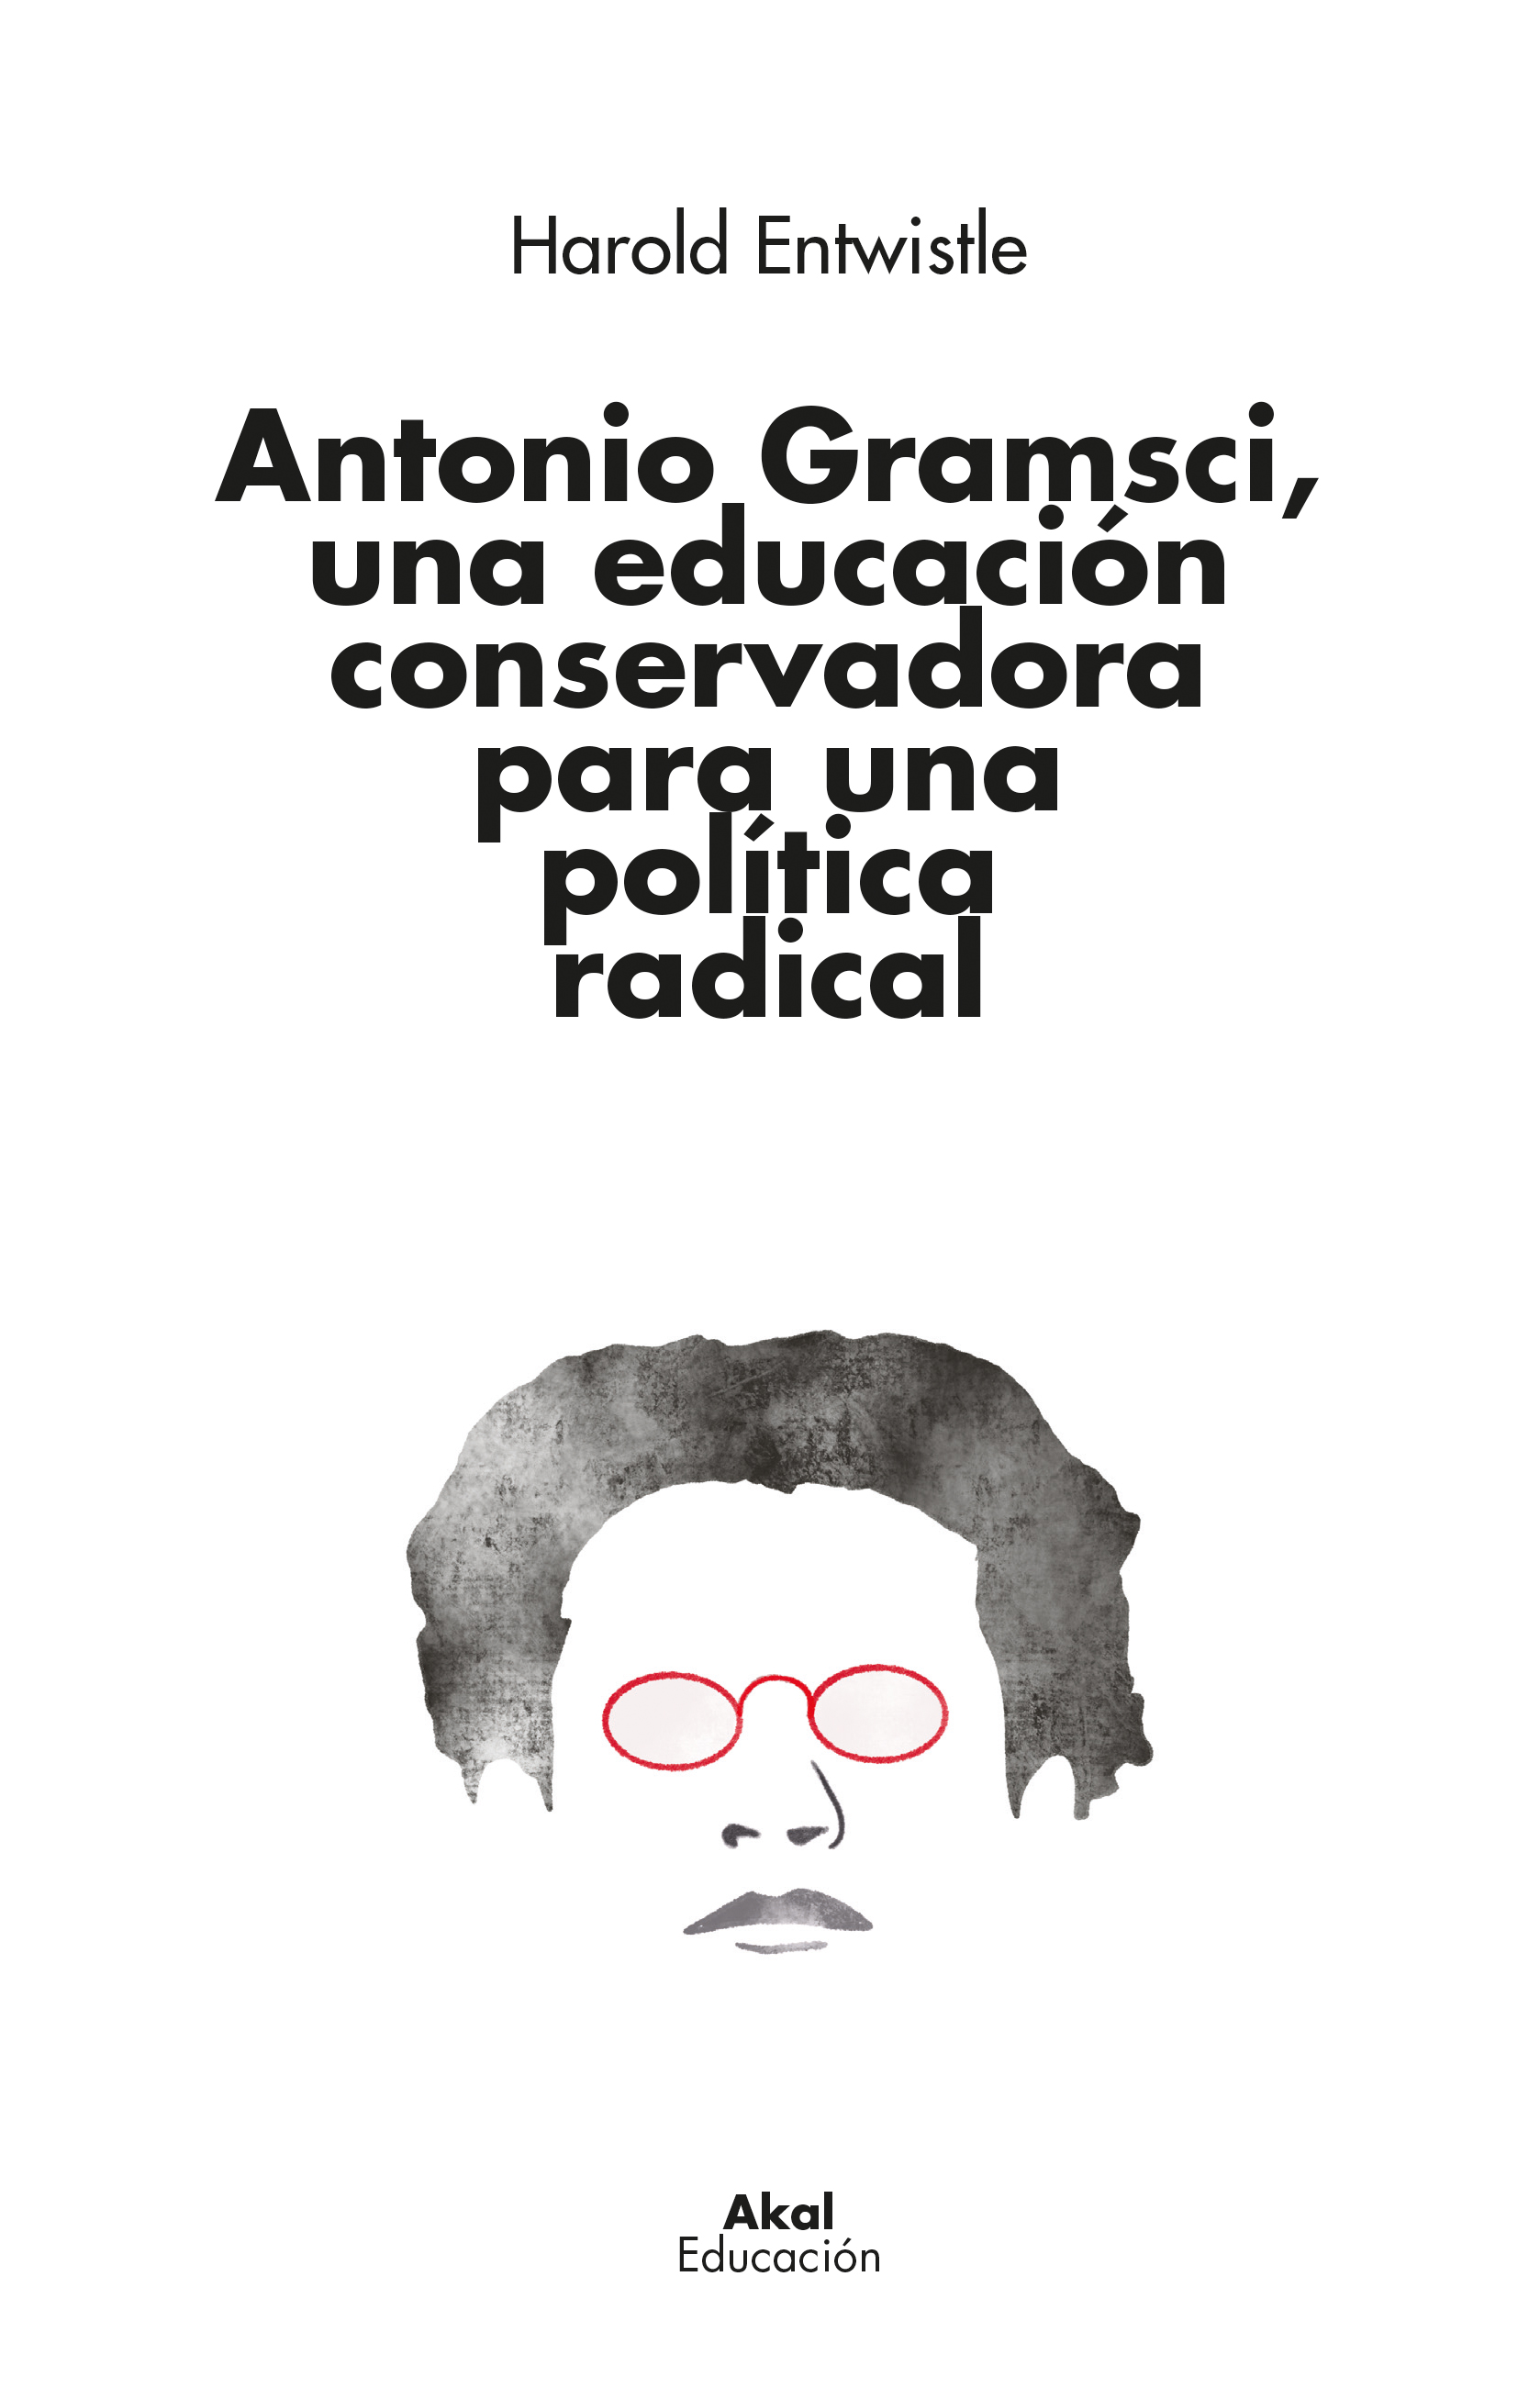 ANTONIO GRAMSCI - Harold Entwistle